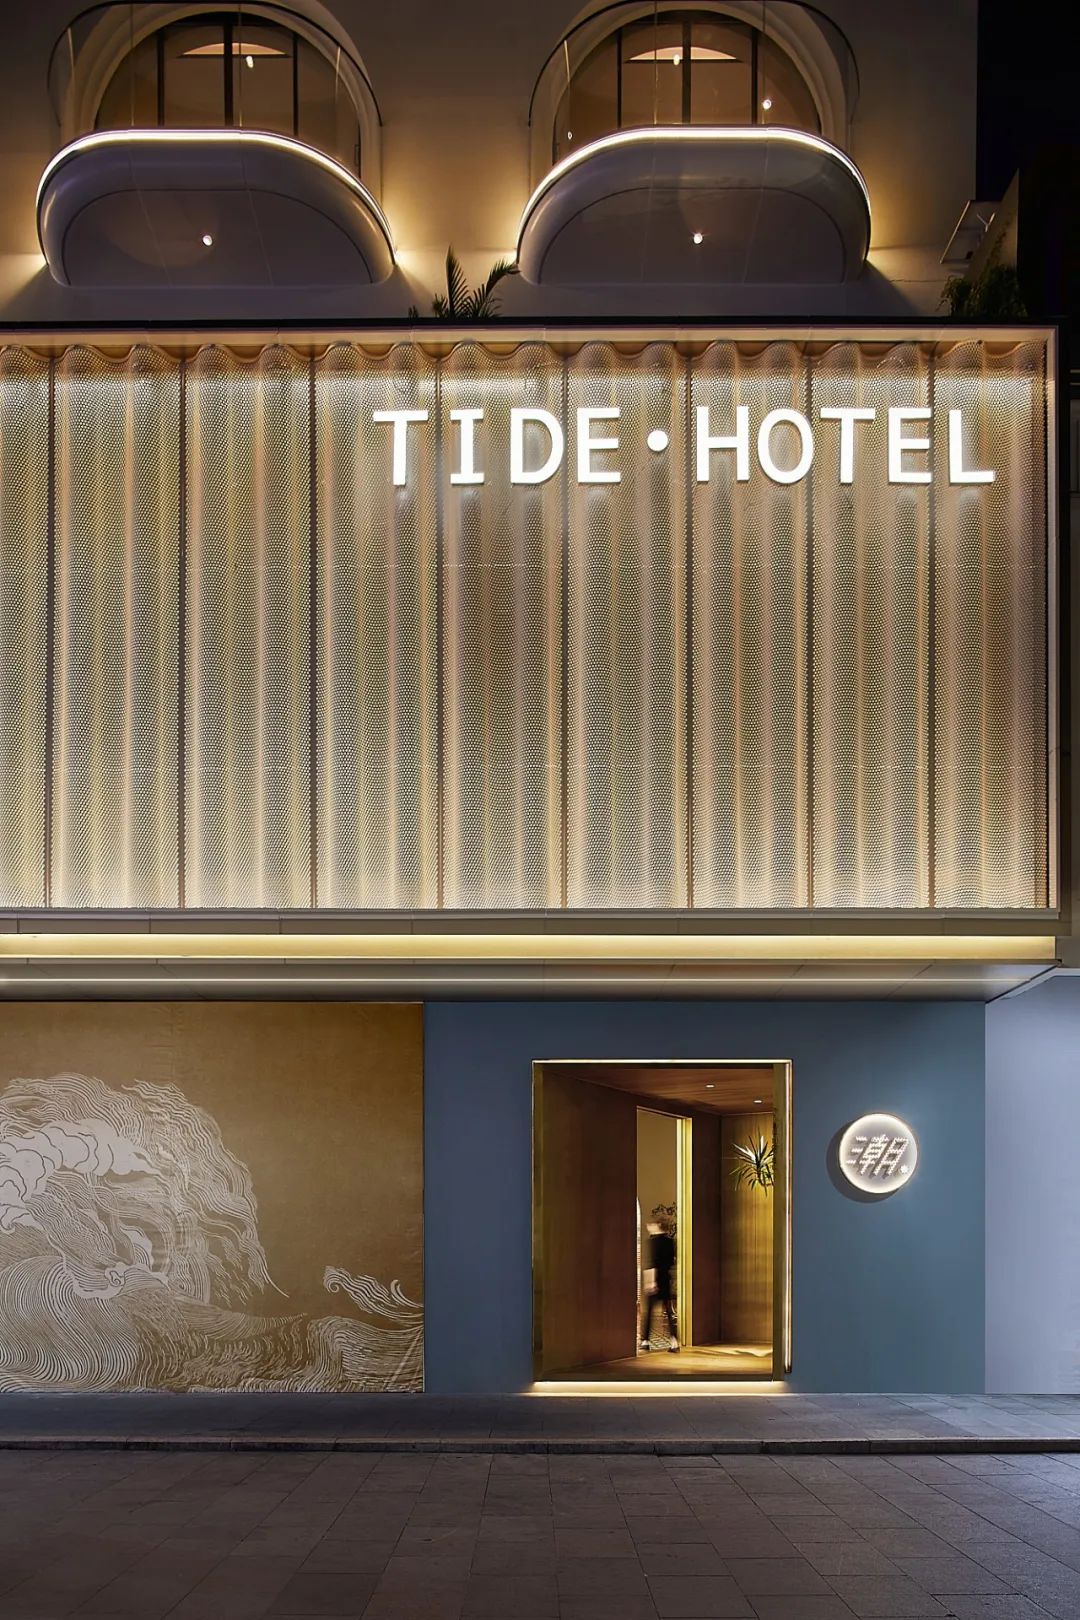 TITAN Property Awards - Tide Hotel